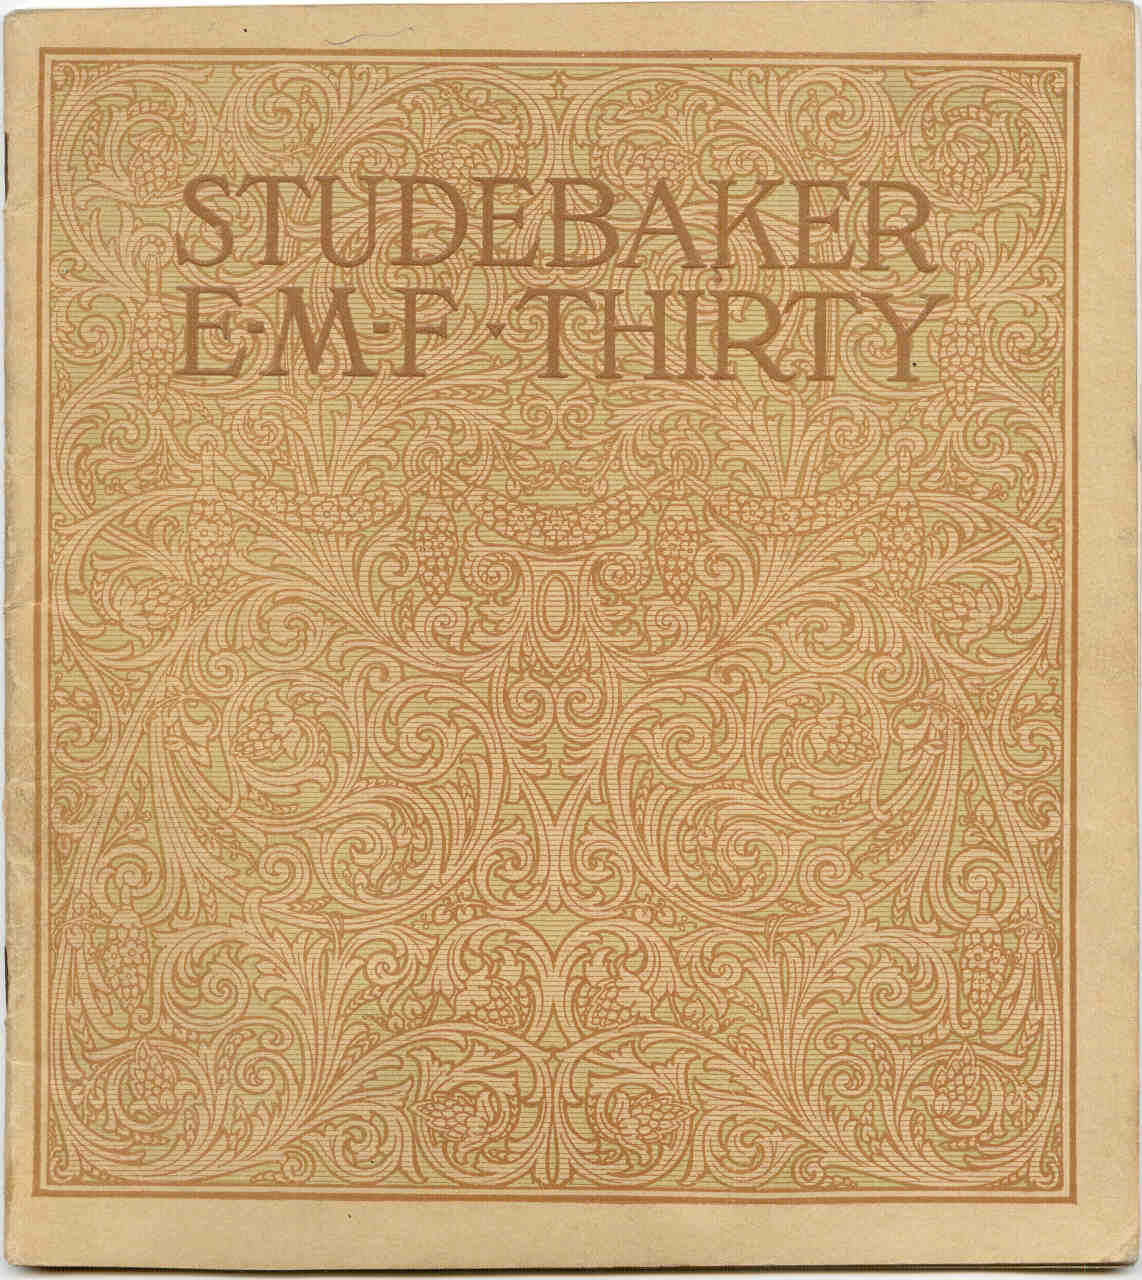 1912 Studebaker E-M-F 30 Brochure-00